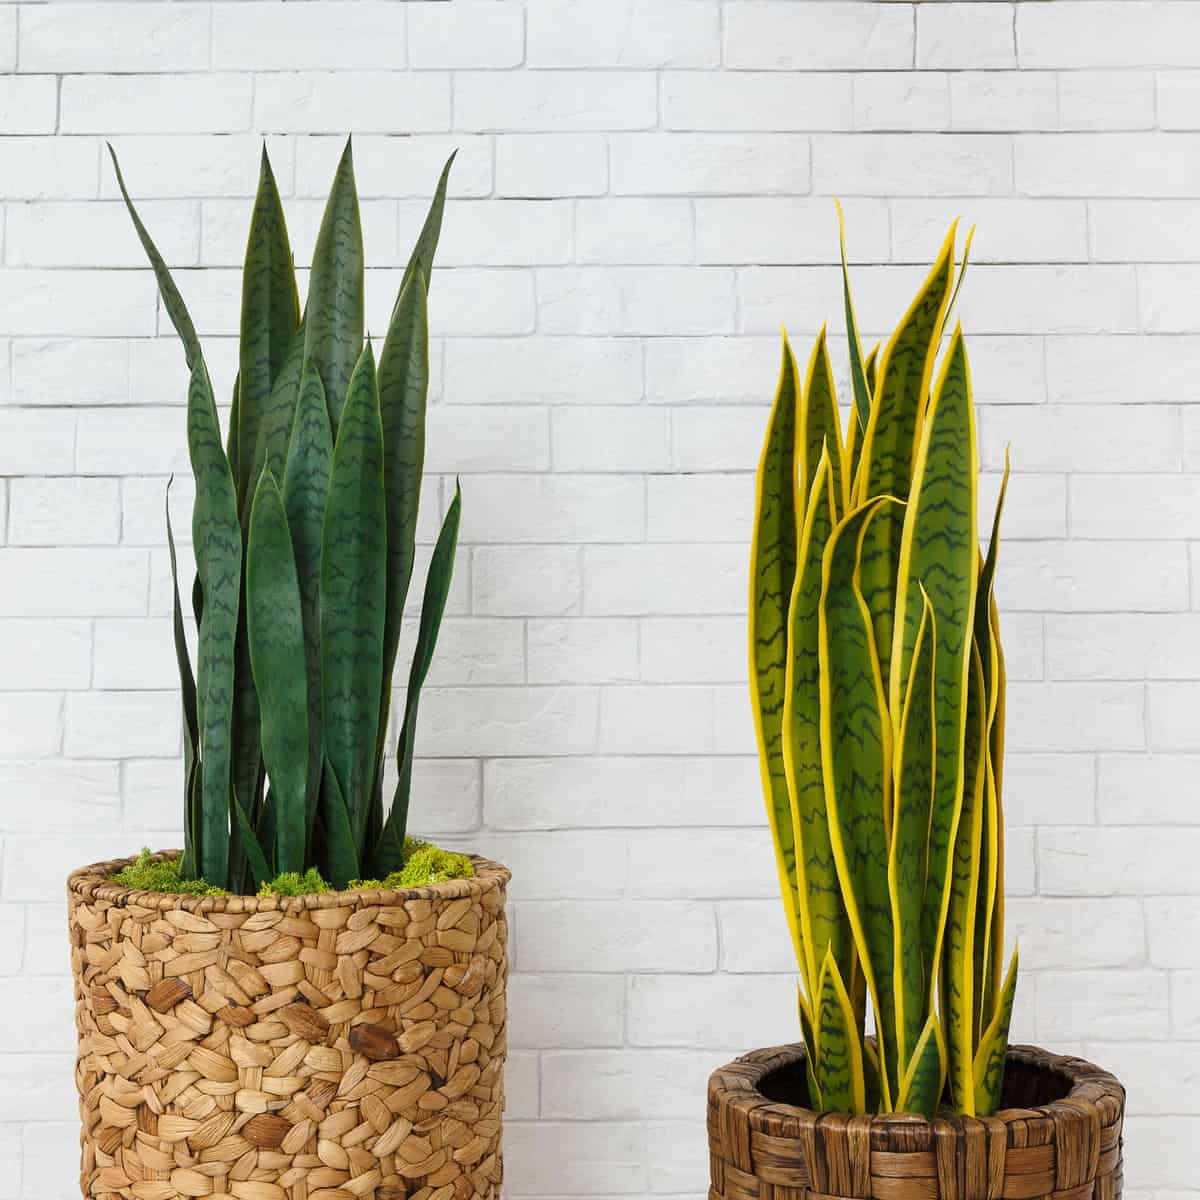 Two Snake Plants In Wicker Baskets On A White Brick Wall